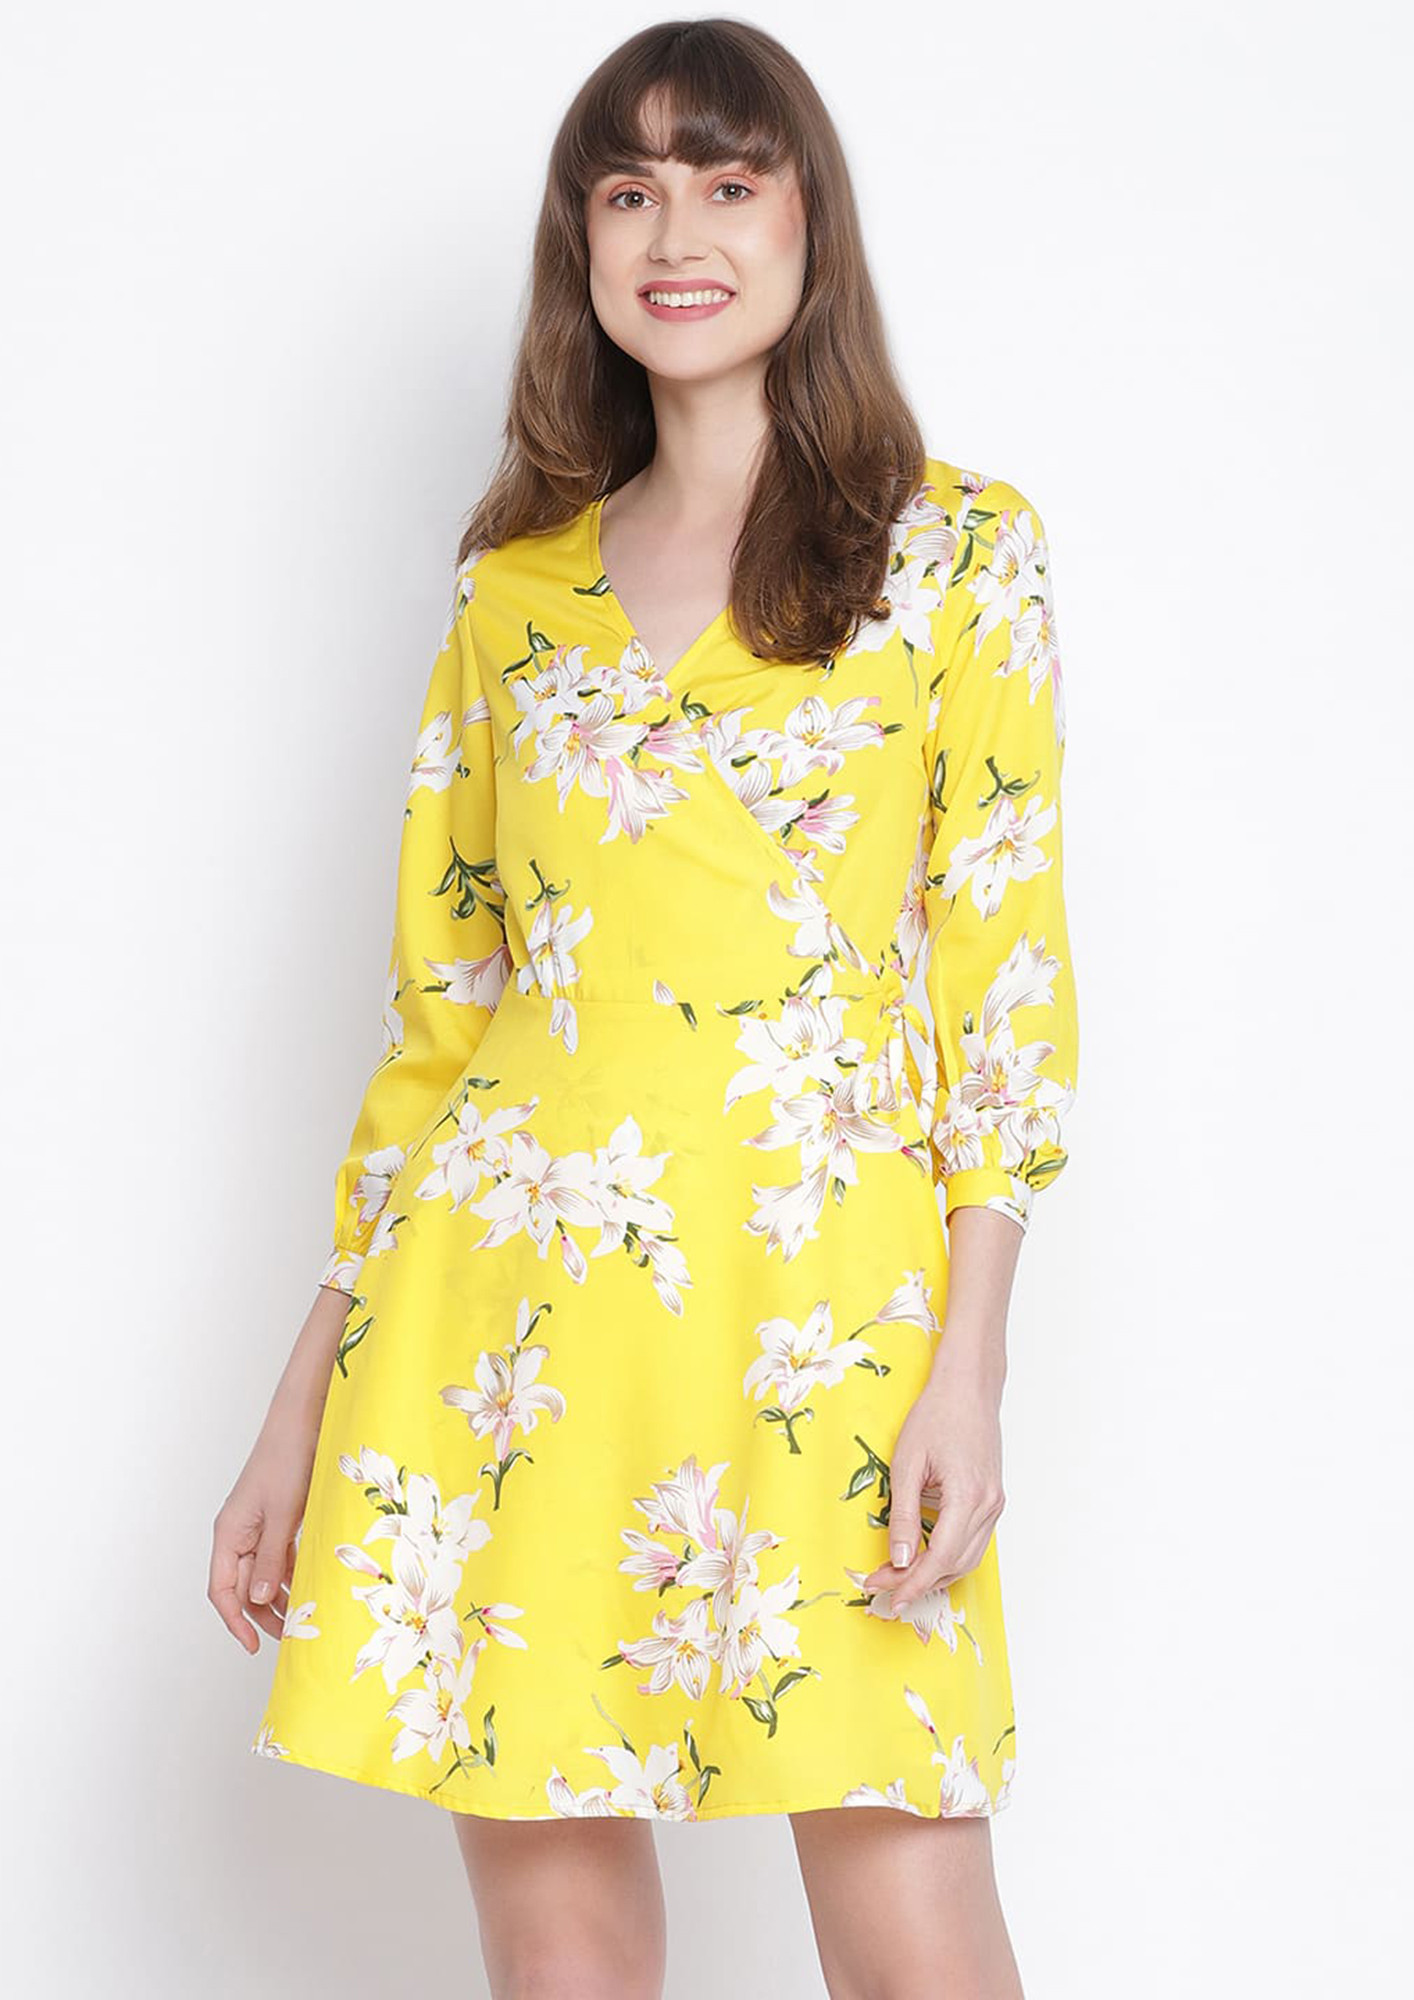 Draax Fashions Women Yellow Floral A-Line Dress